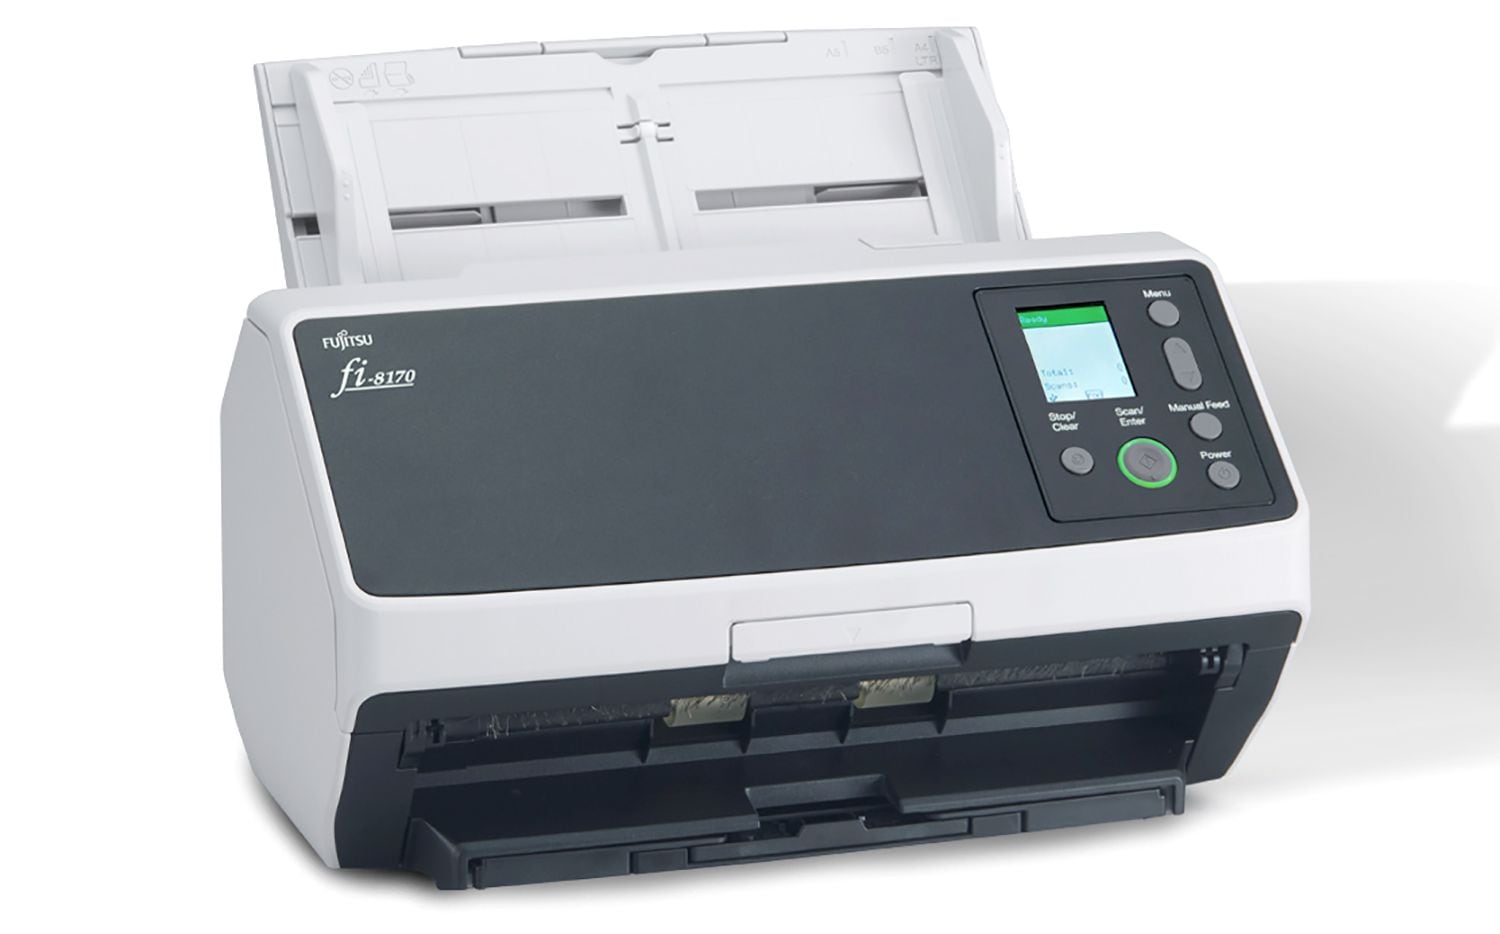 The Fujitsu fi-8170 document scanner